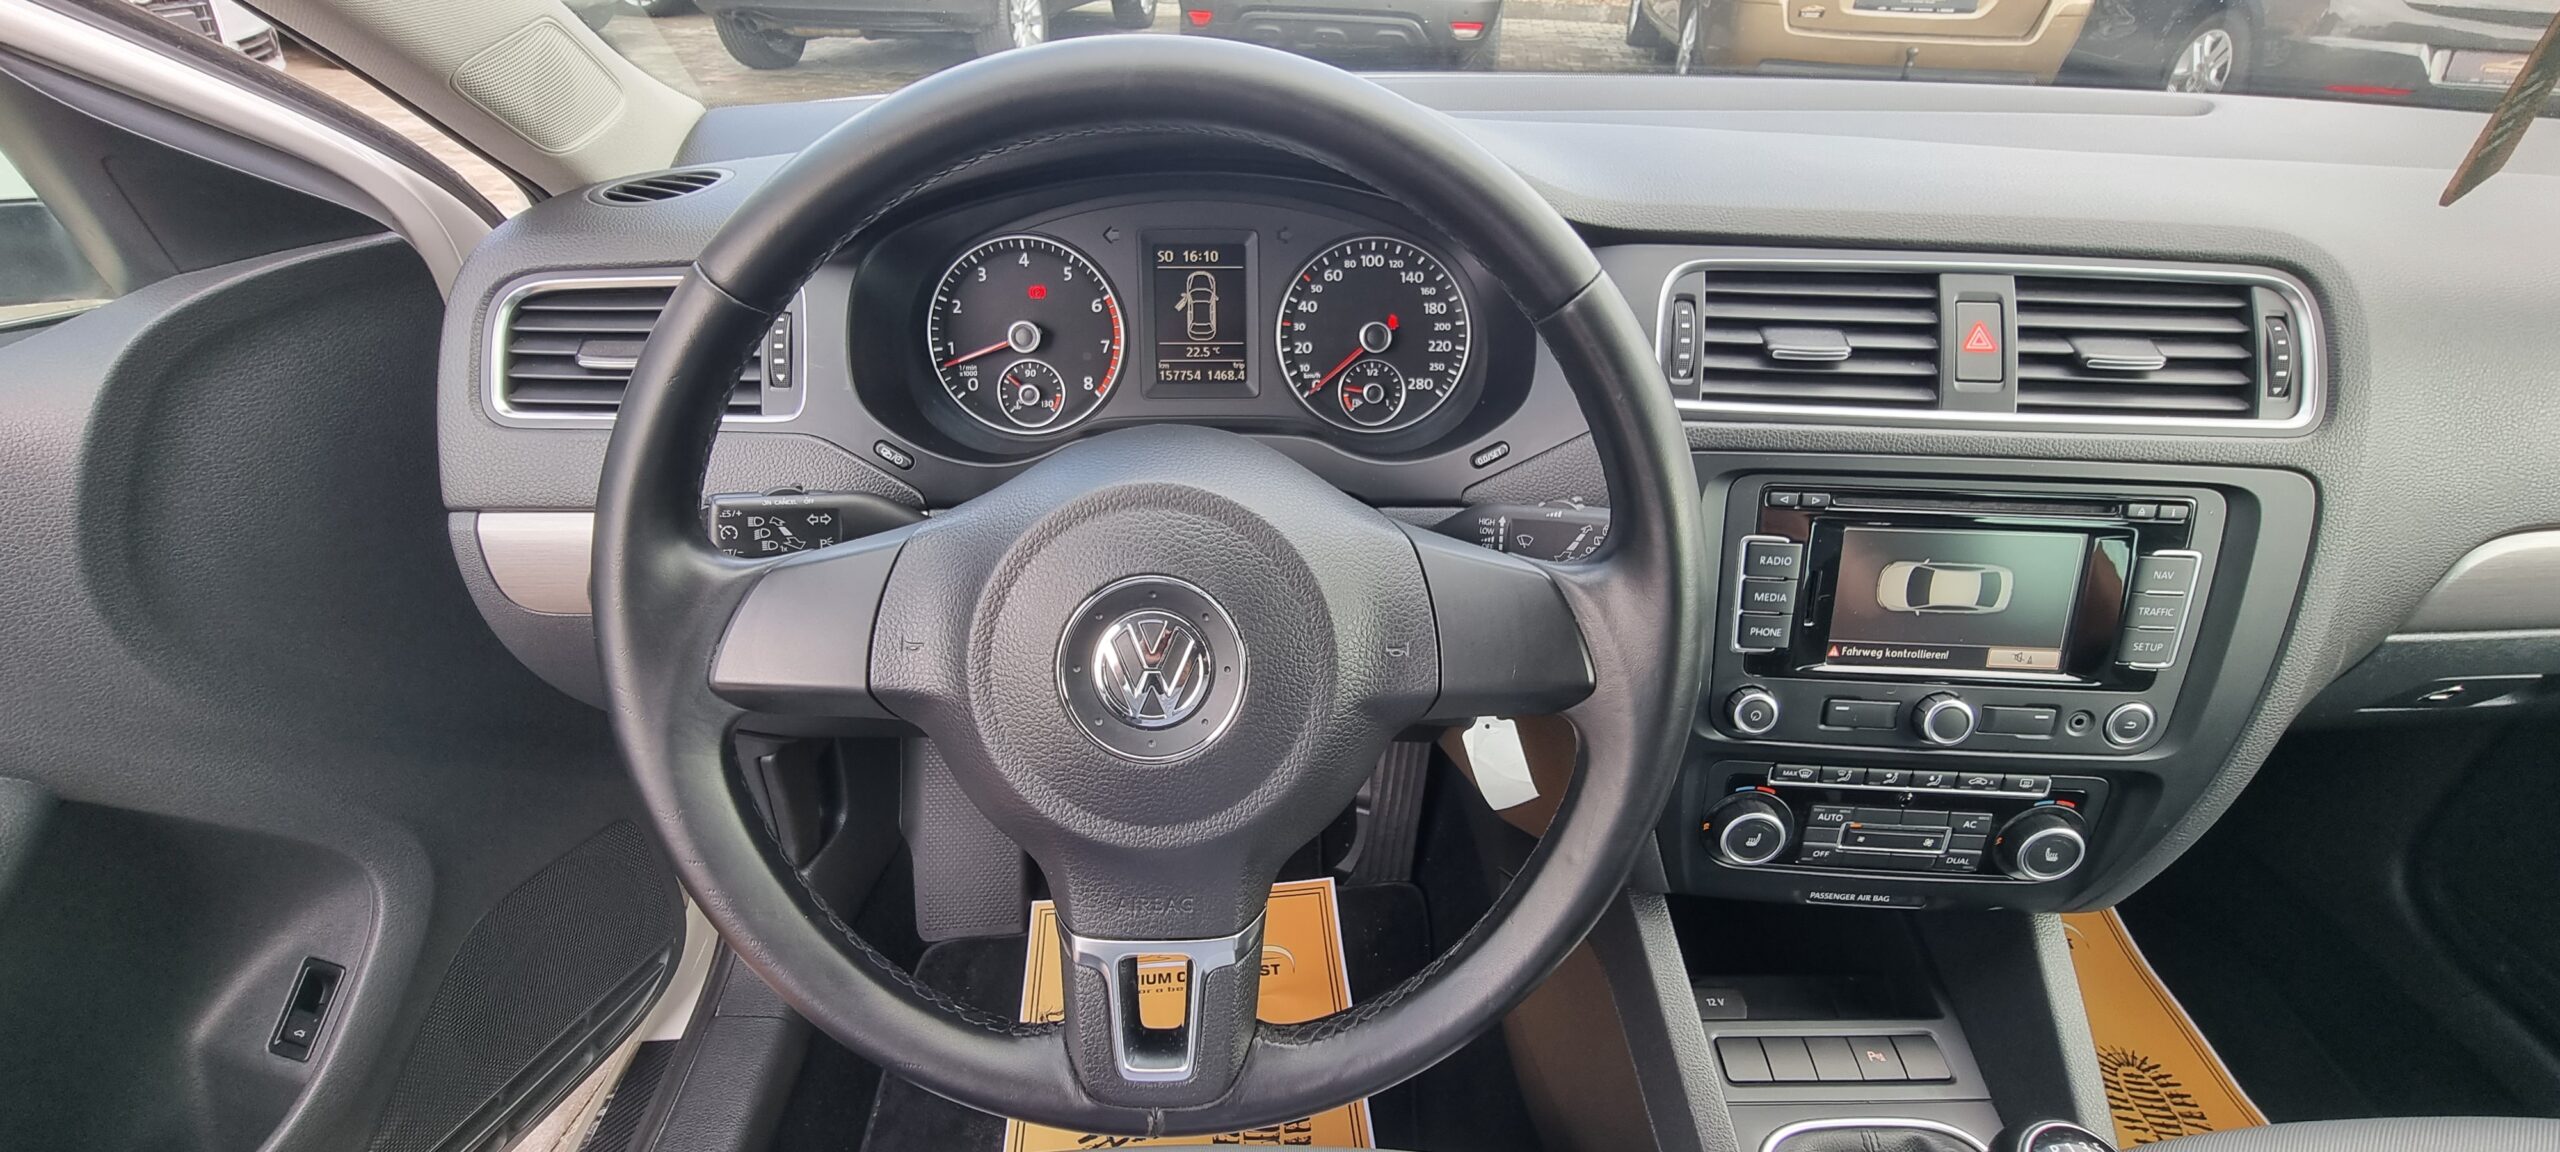 VW JETTA, 1.4 BENZINA, 122 CP, EURO 5, AN 2012